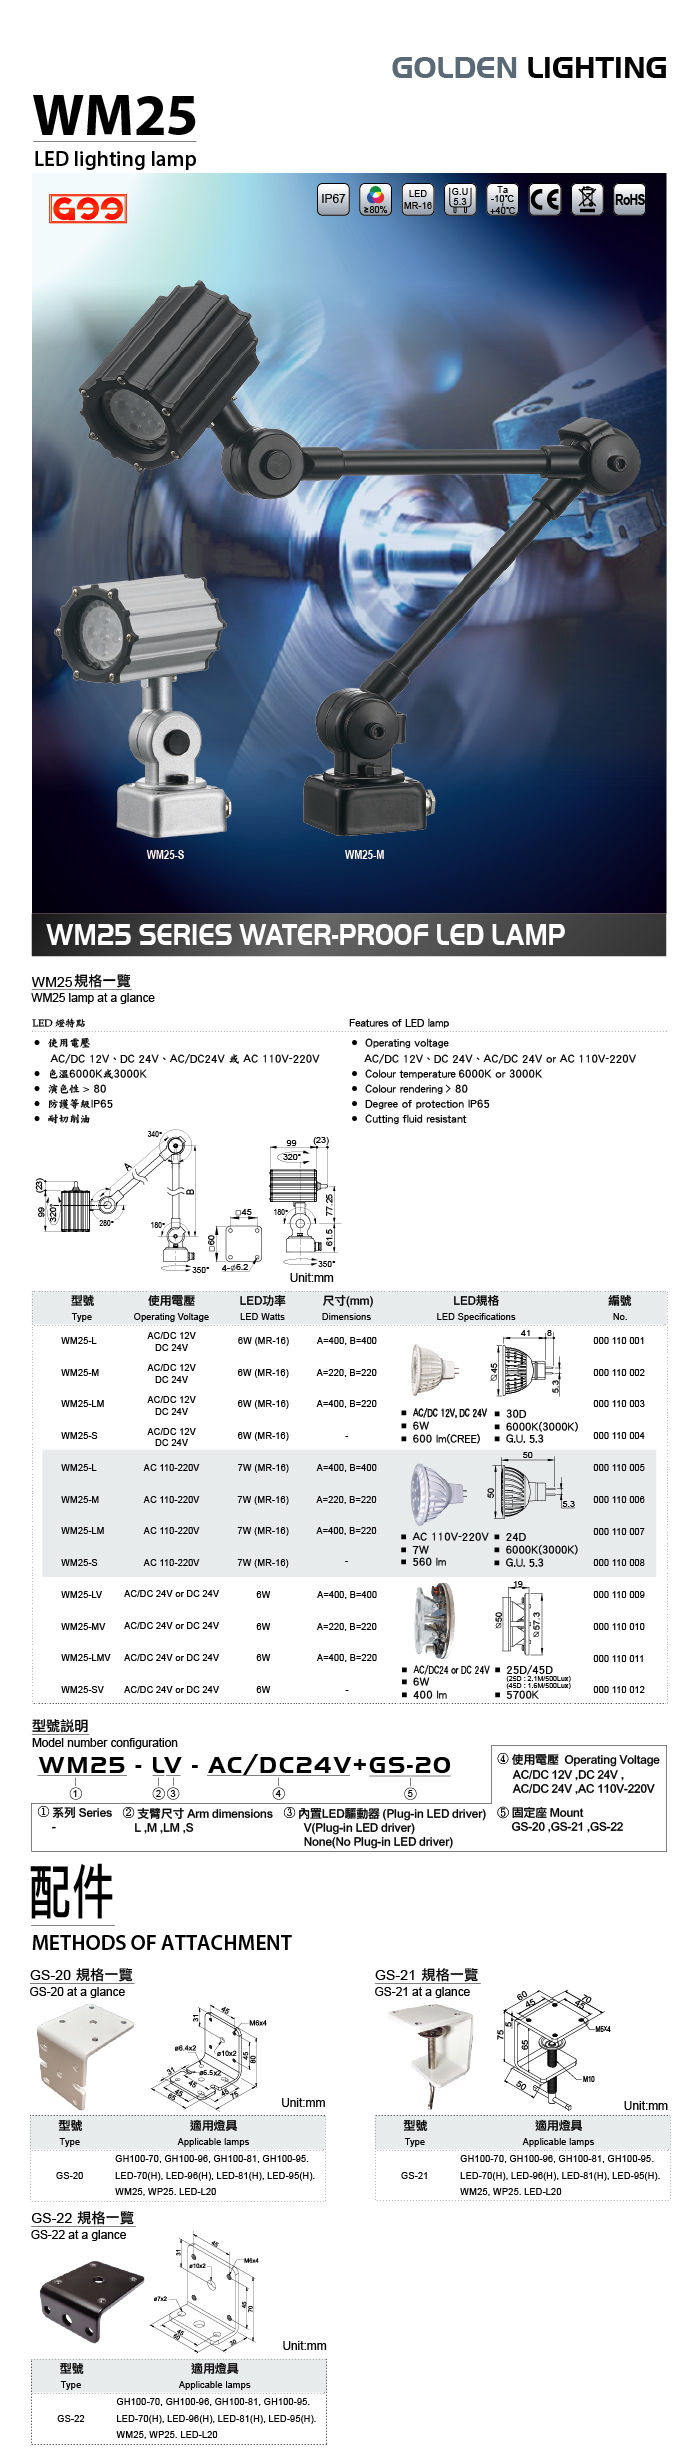 WM25 WATER-PROOF LED LIGHTING LAMP